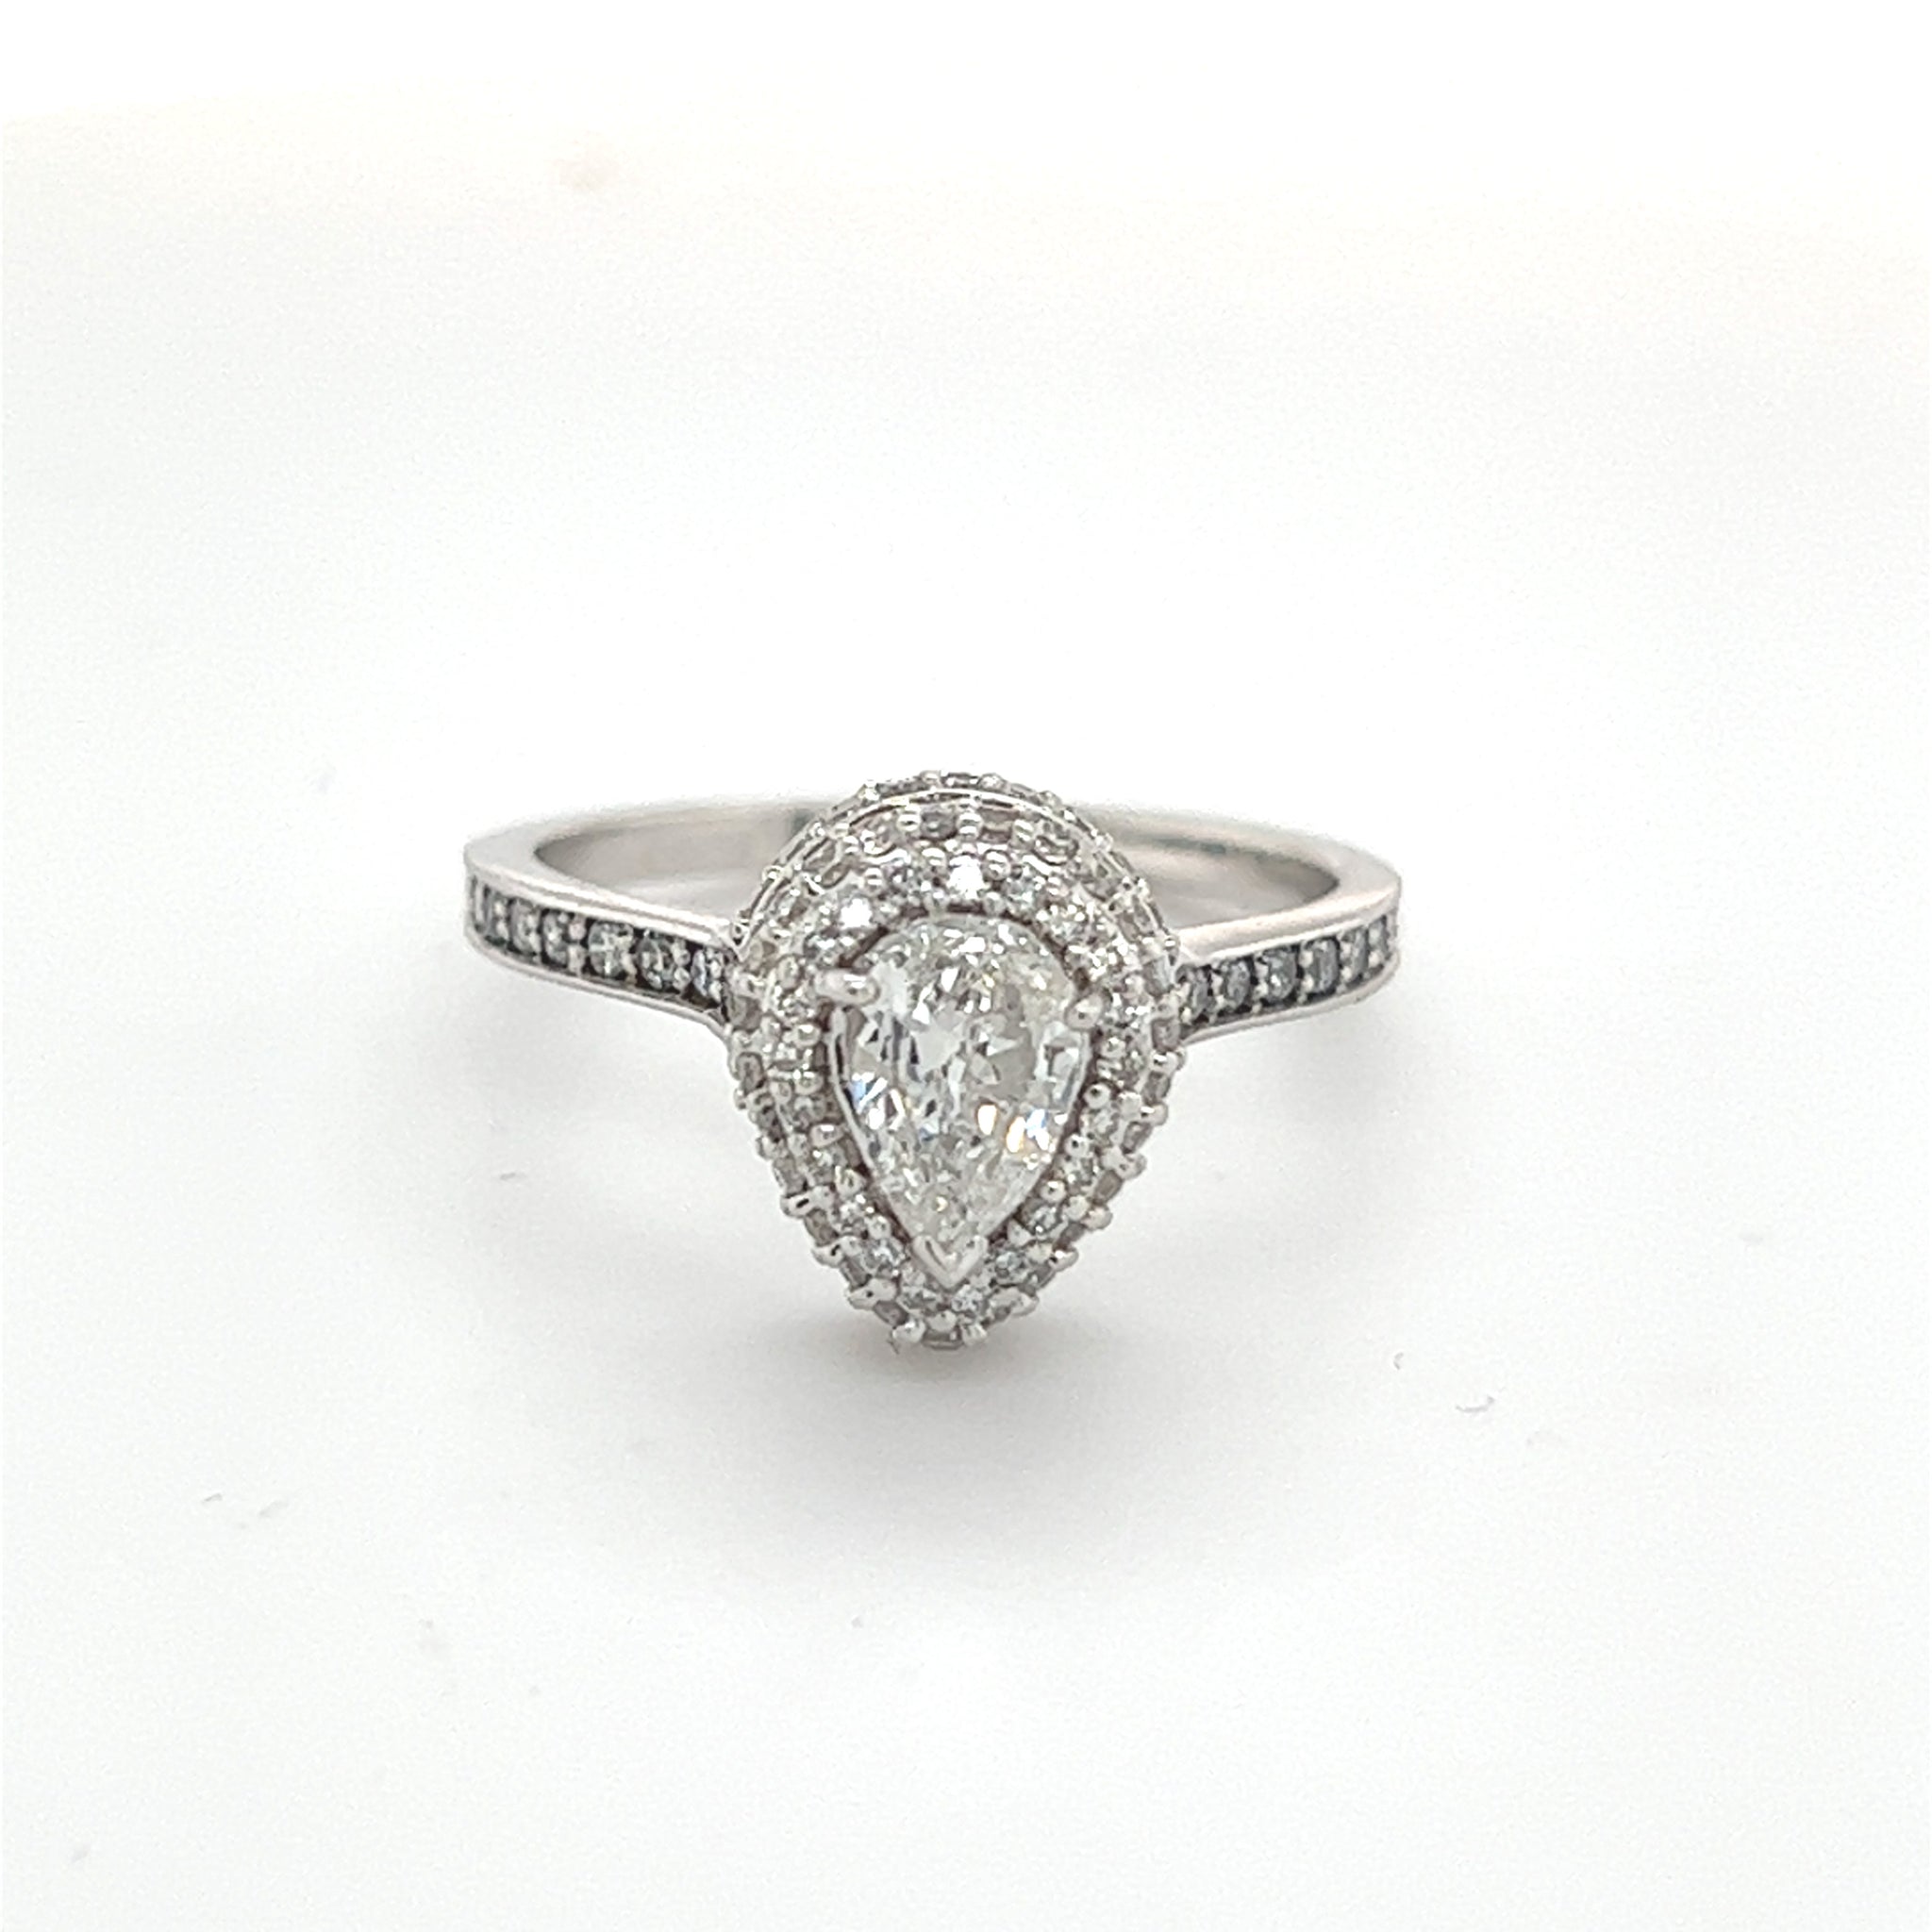 Diamond Ring Size 6.5 14k Gold 0.91 TCW 3.19 Grams Certified $5,950 215101